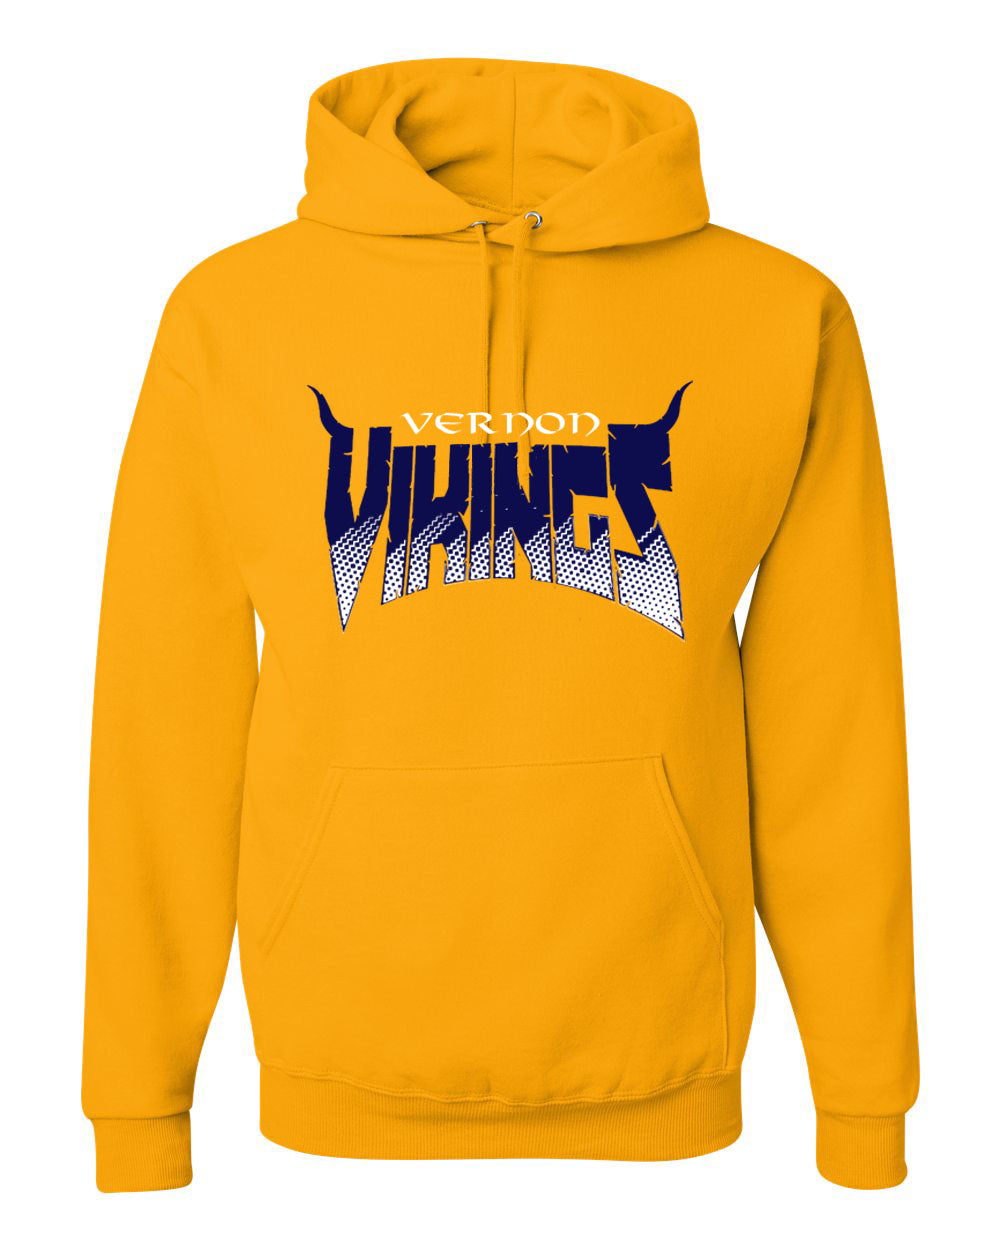 VTHS Design 15 Hooded Sweatshirt, Gold